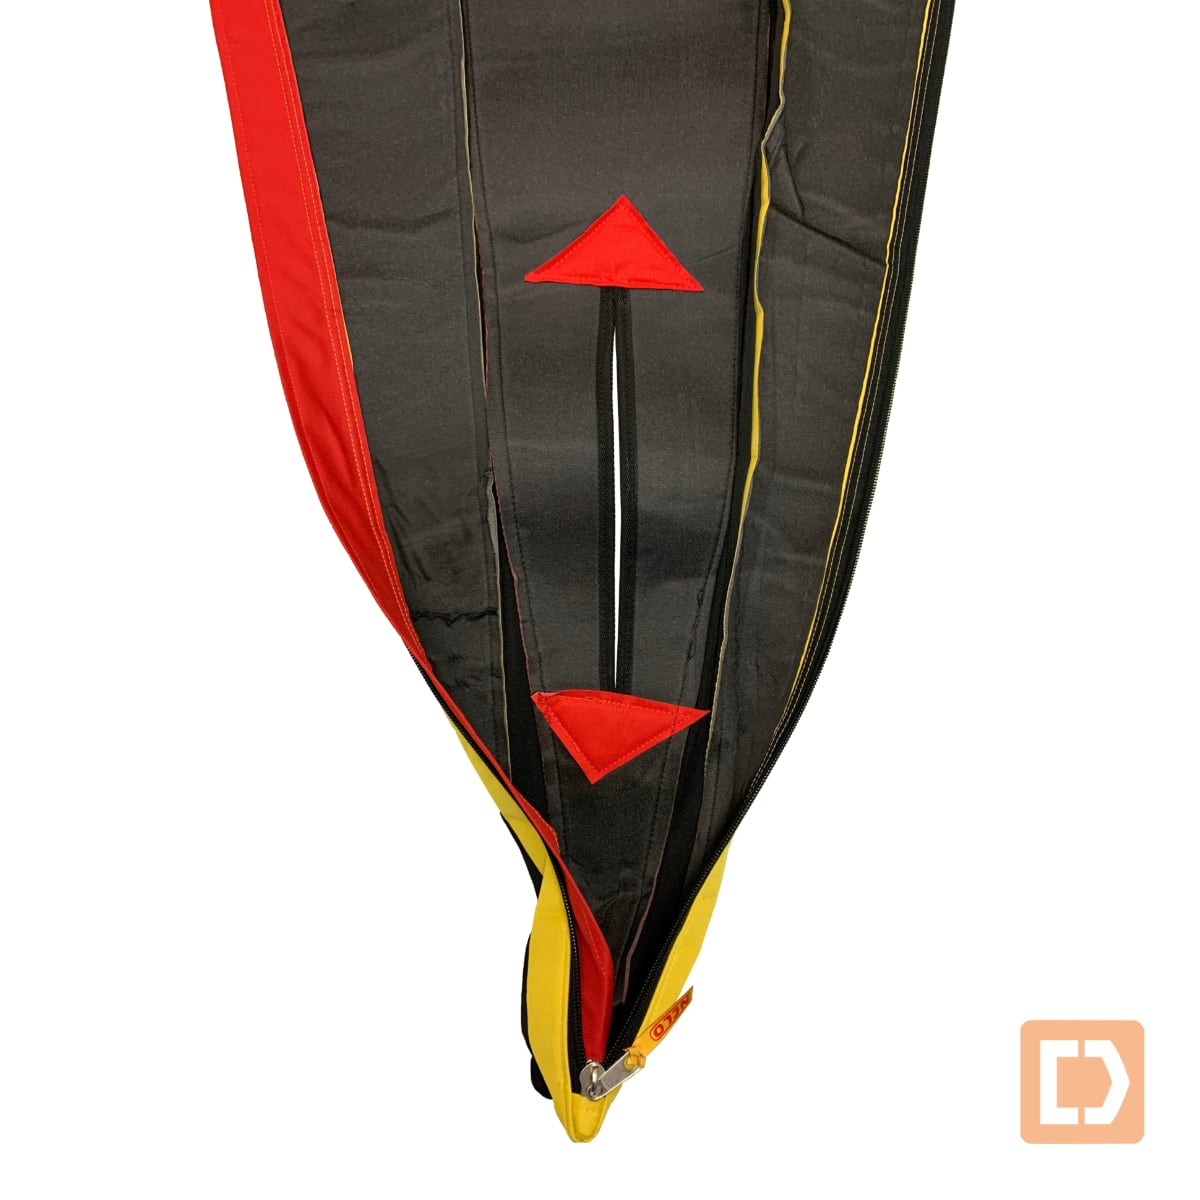 Nelo kayak cover racing K1 red yellow inside